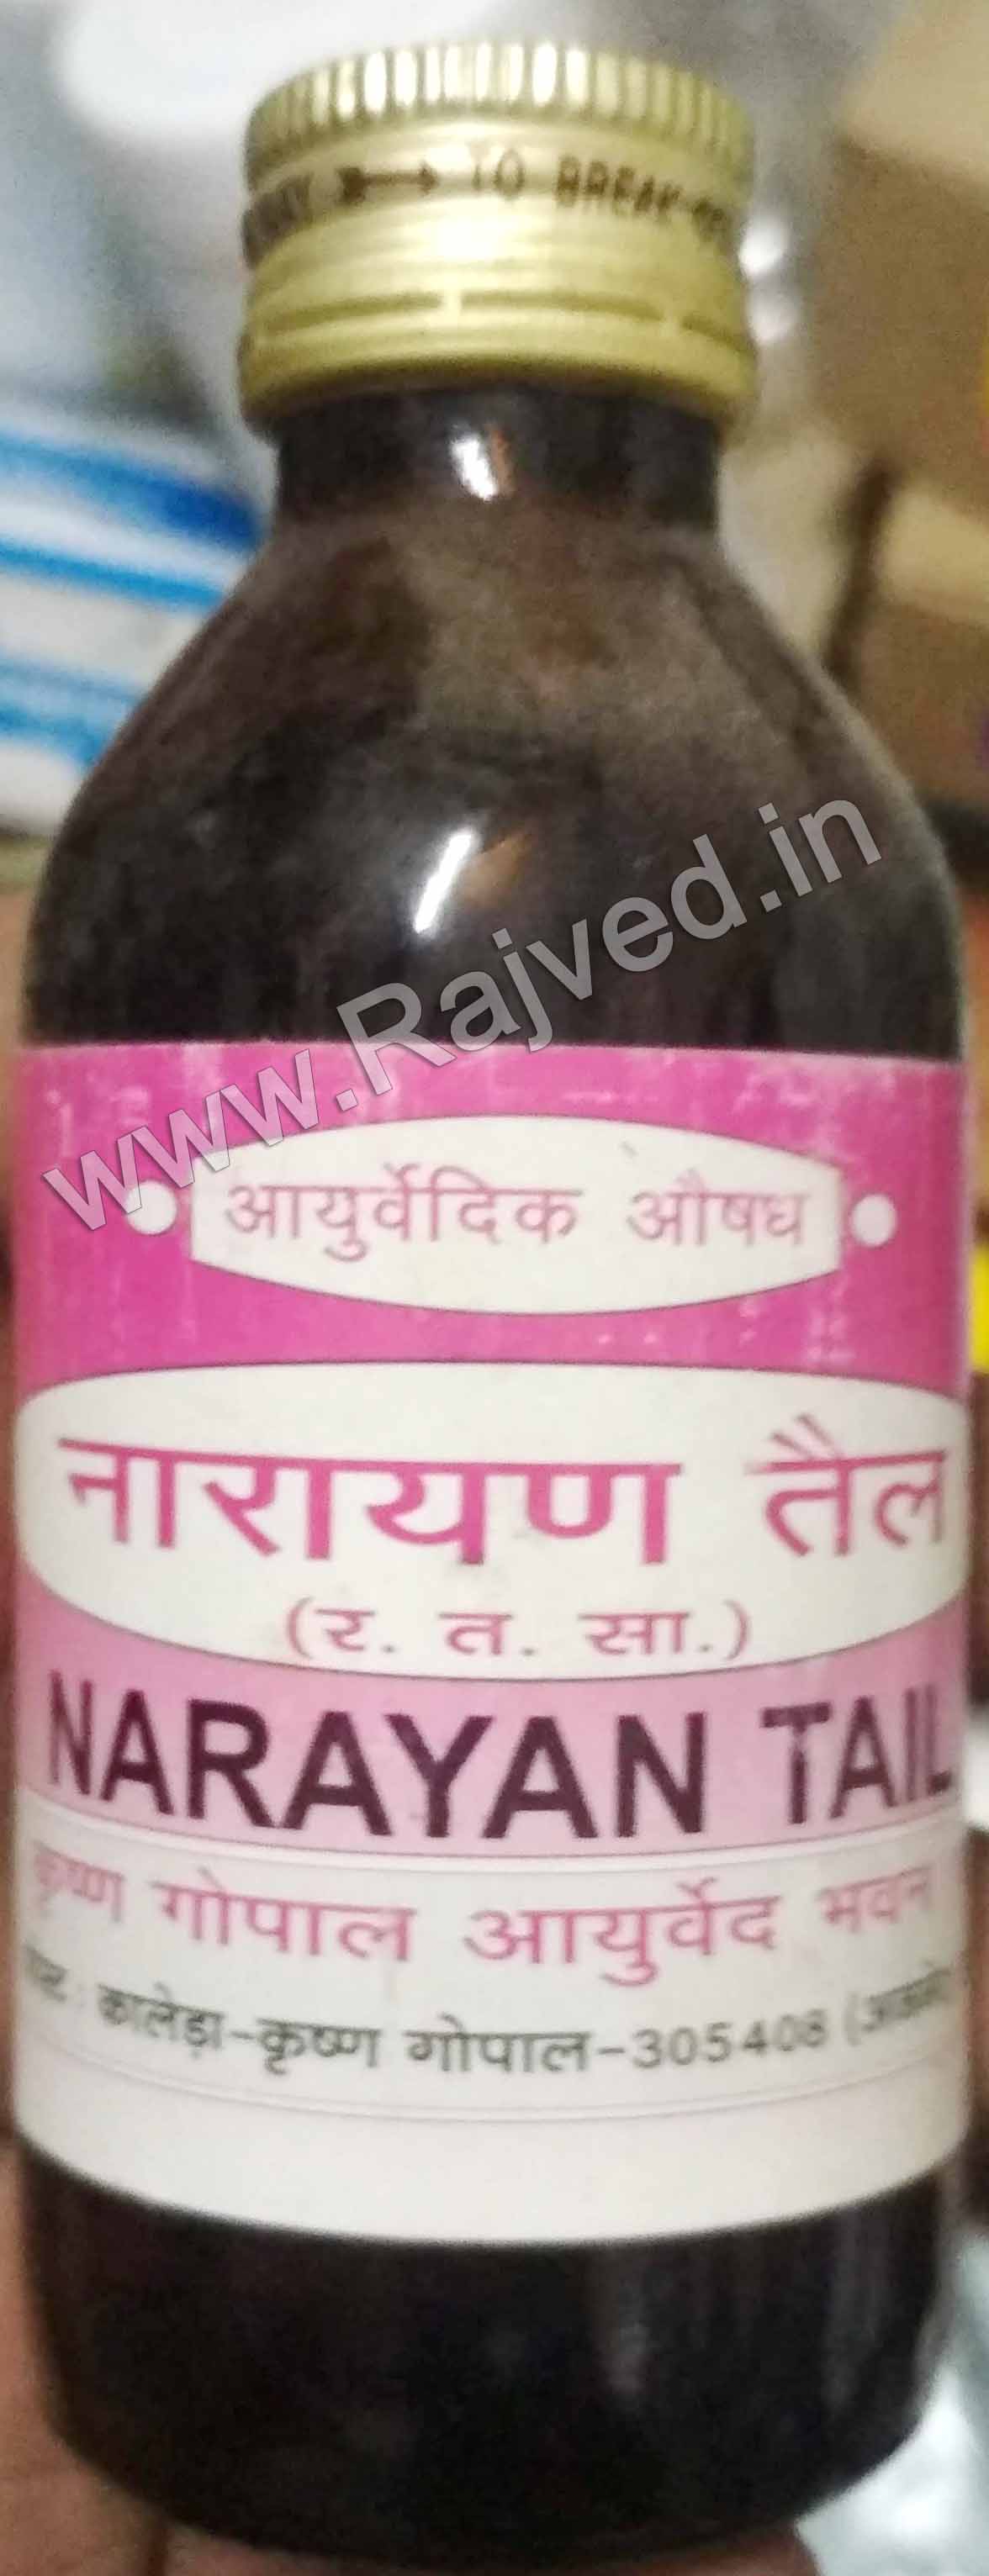 narayan tail 50ml krishna gopal ayurved bhavan